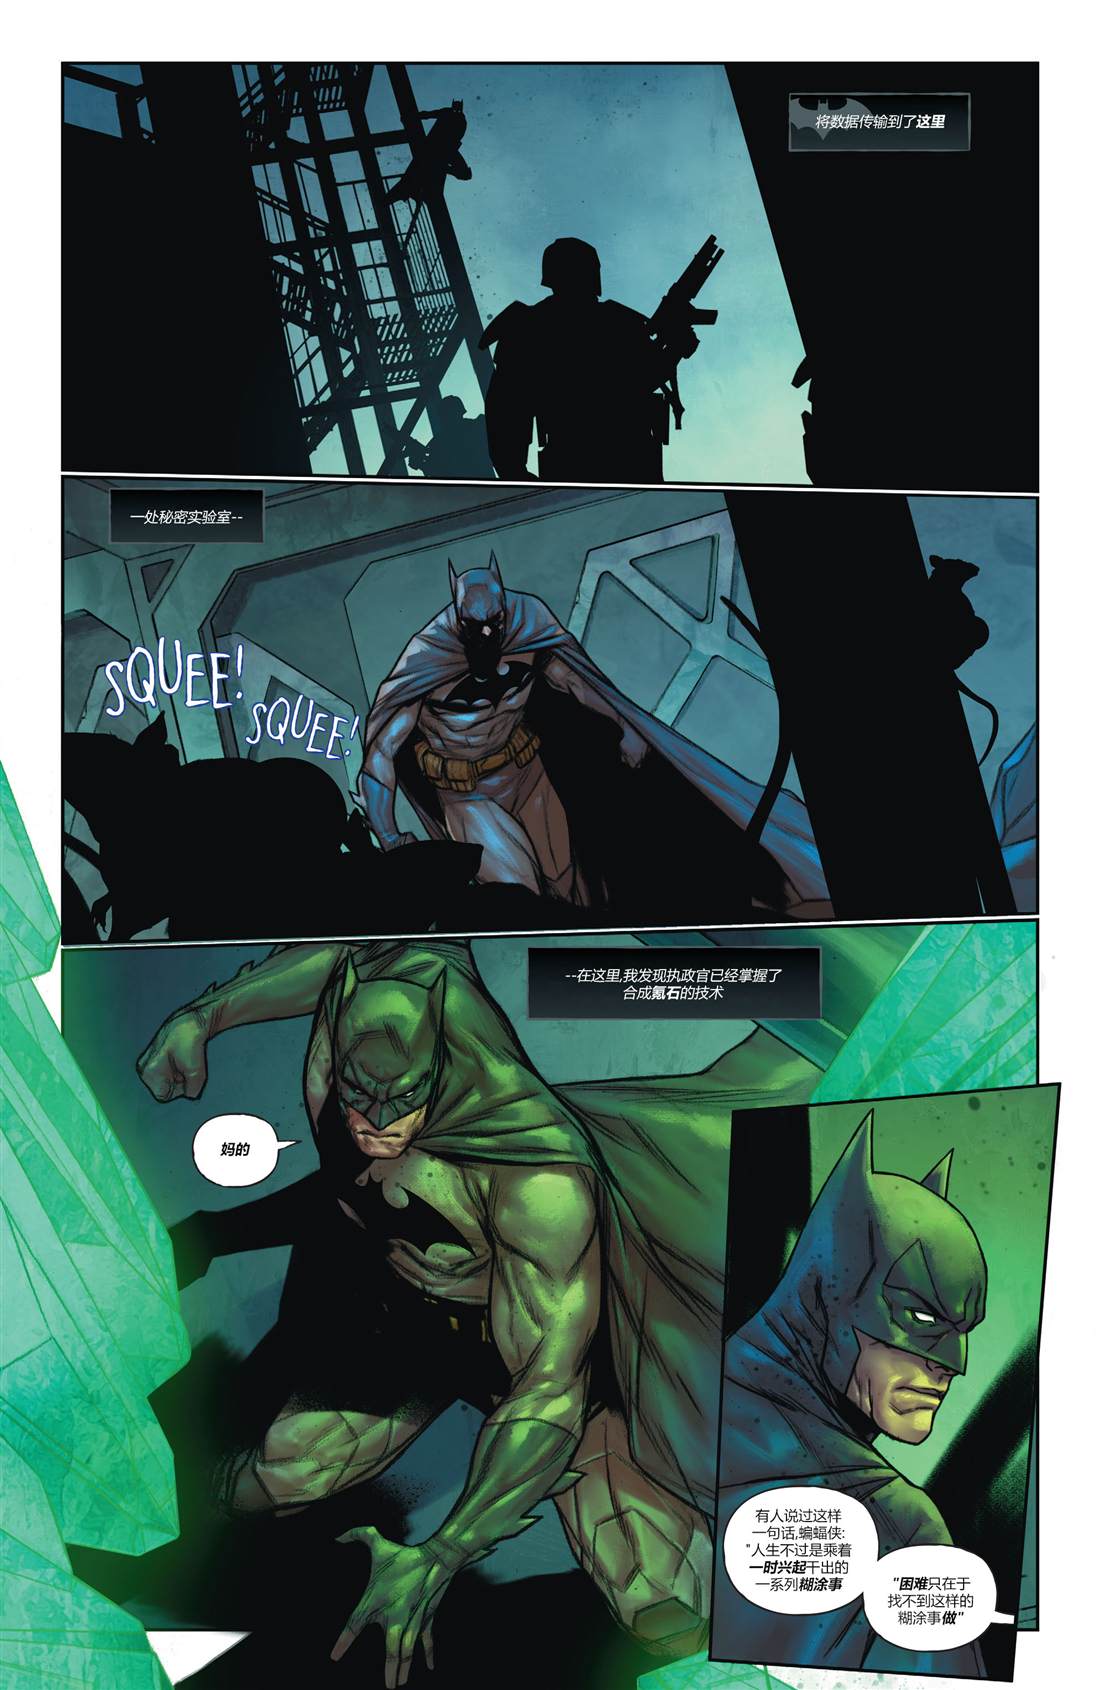 DC未來態 - 蝙蝠俠超人#2 - 2